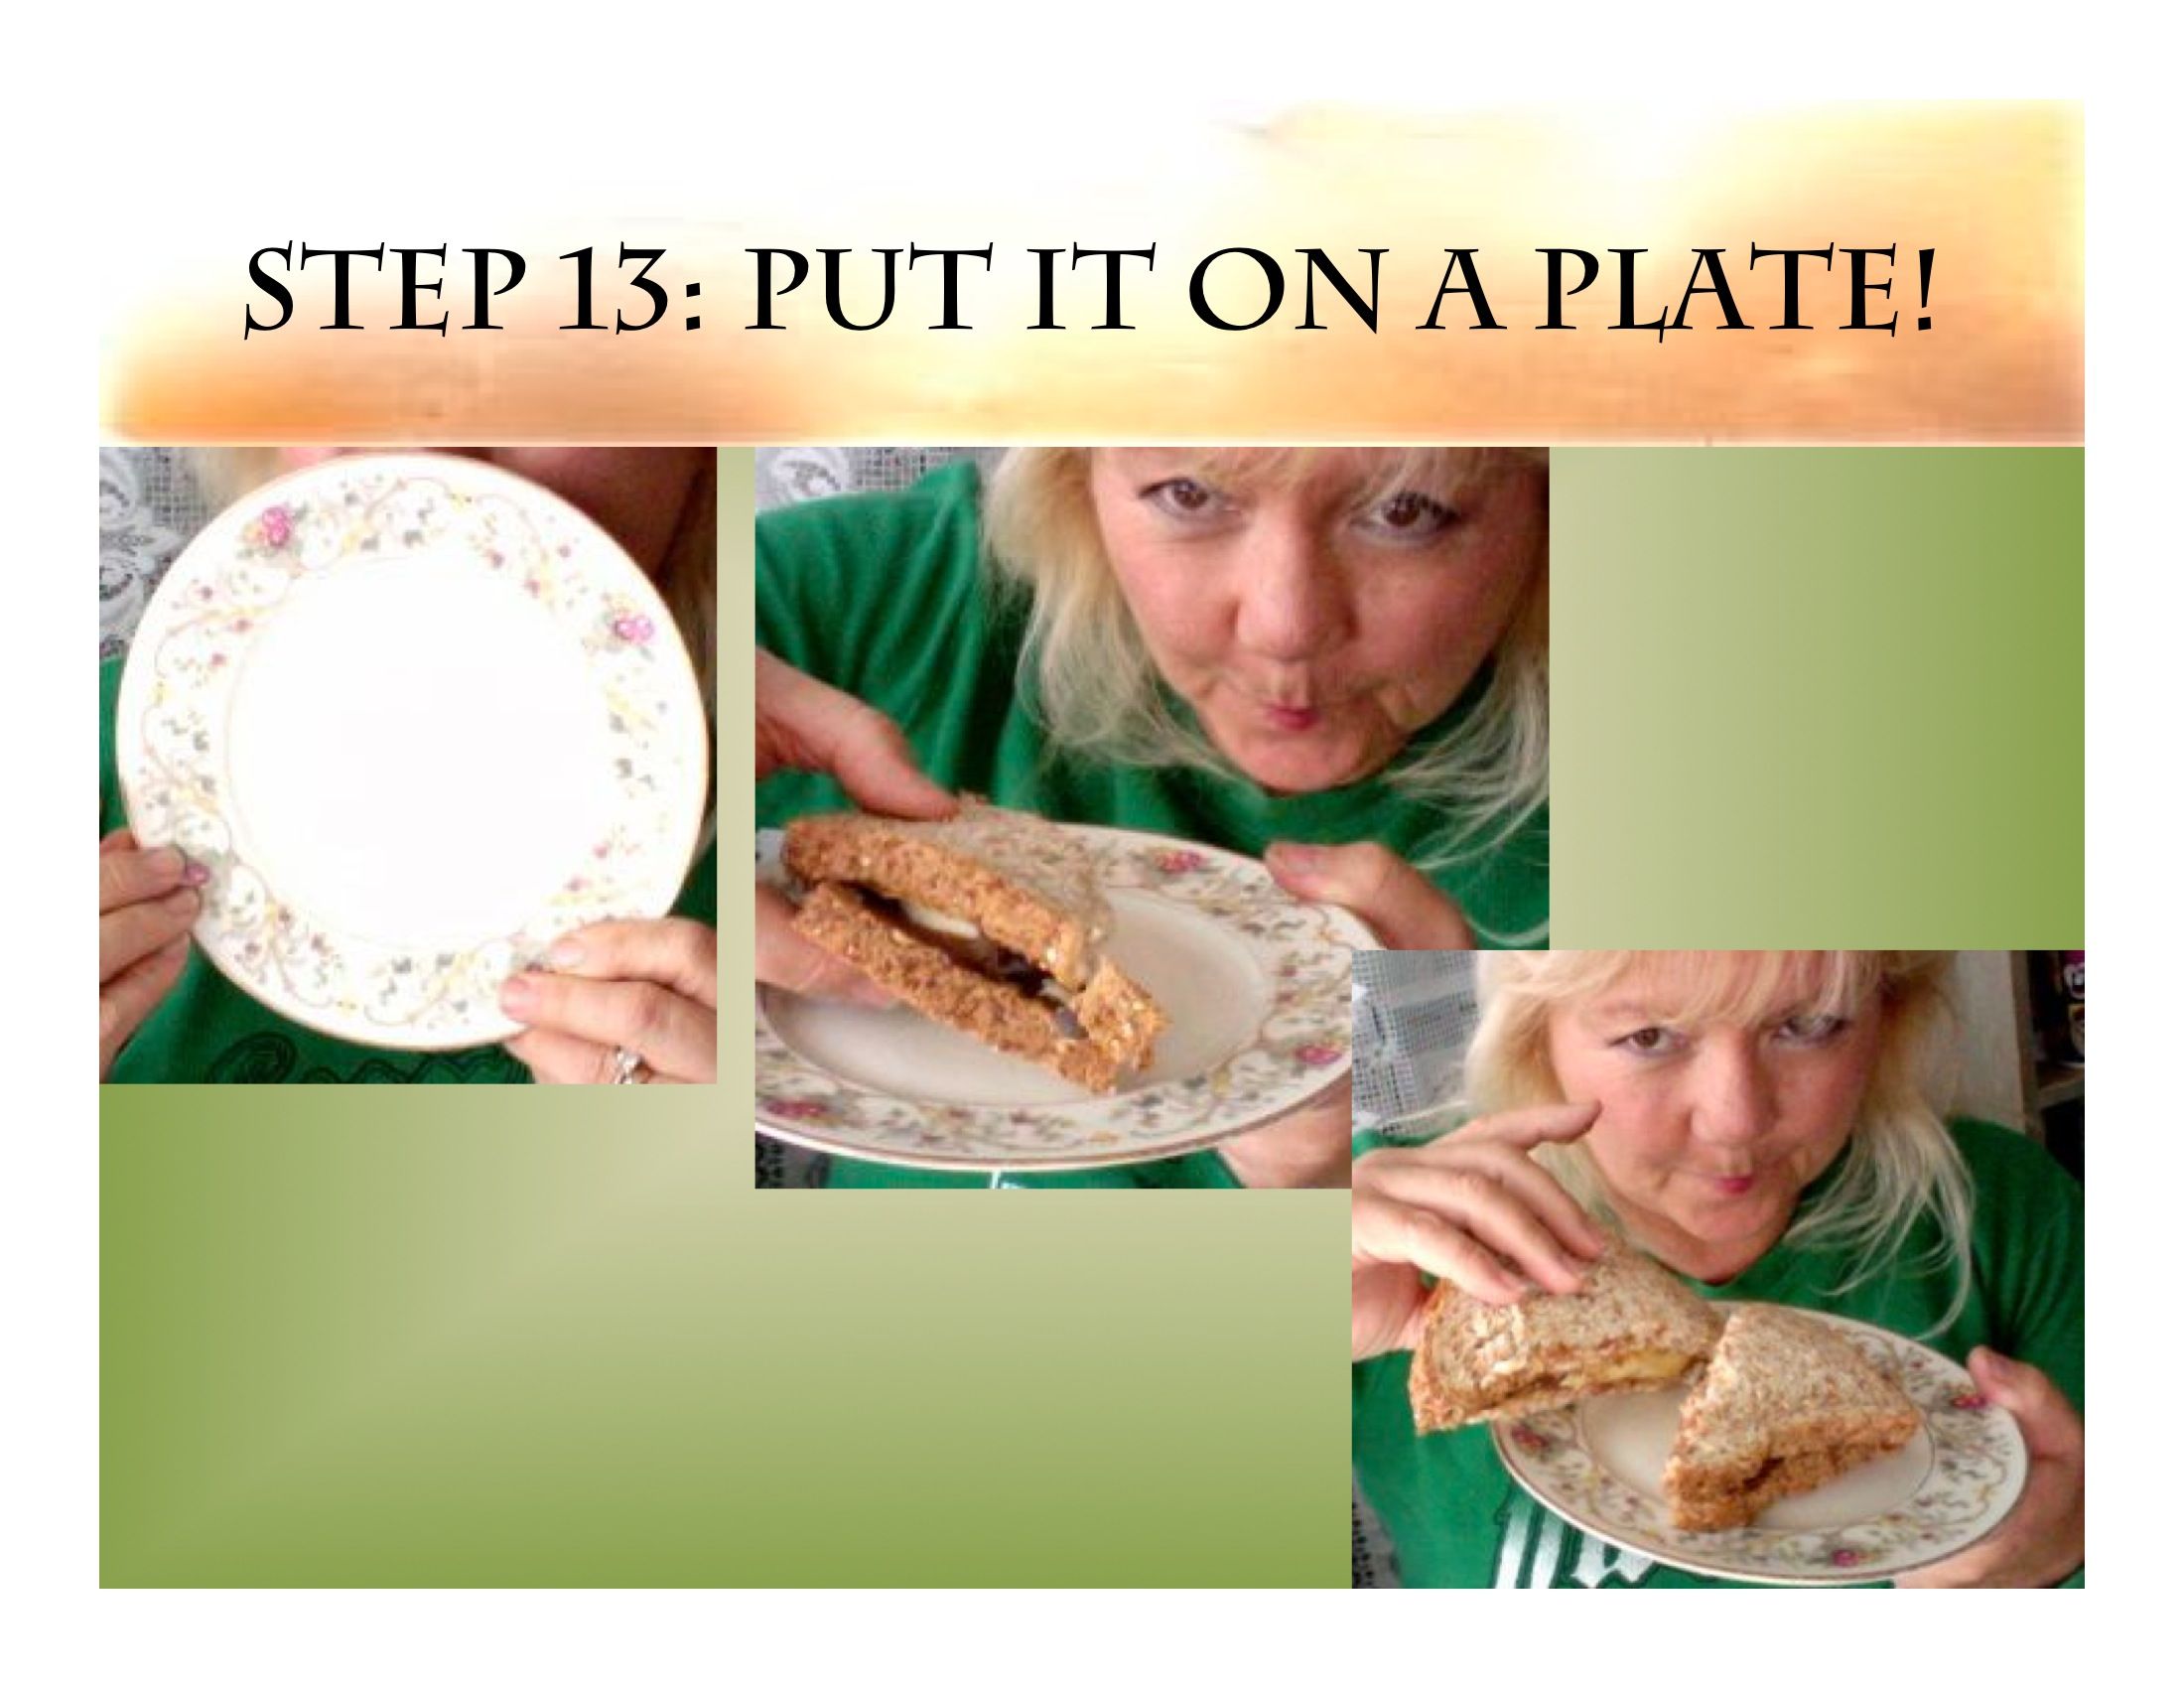 Step 13: Put on a Plate